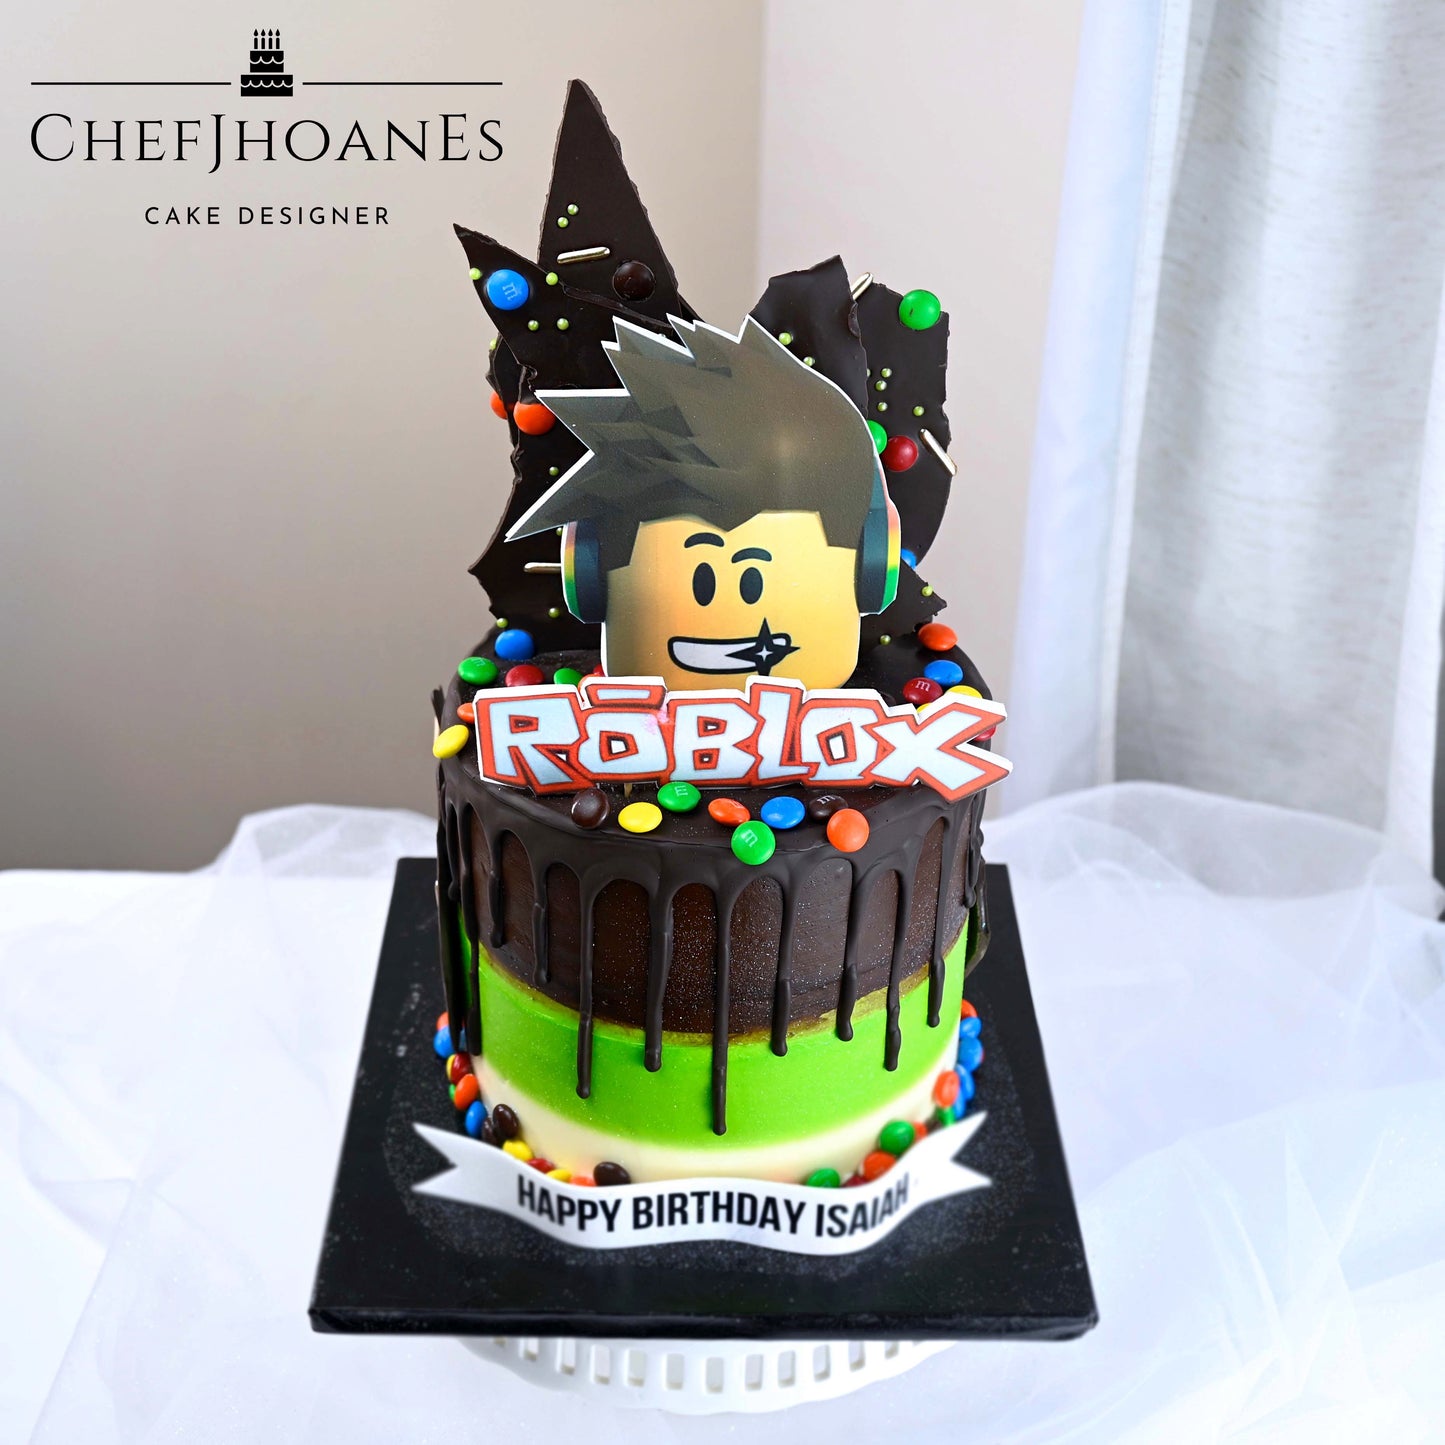 Roblox cake. Feed 15 people.